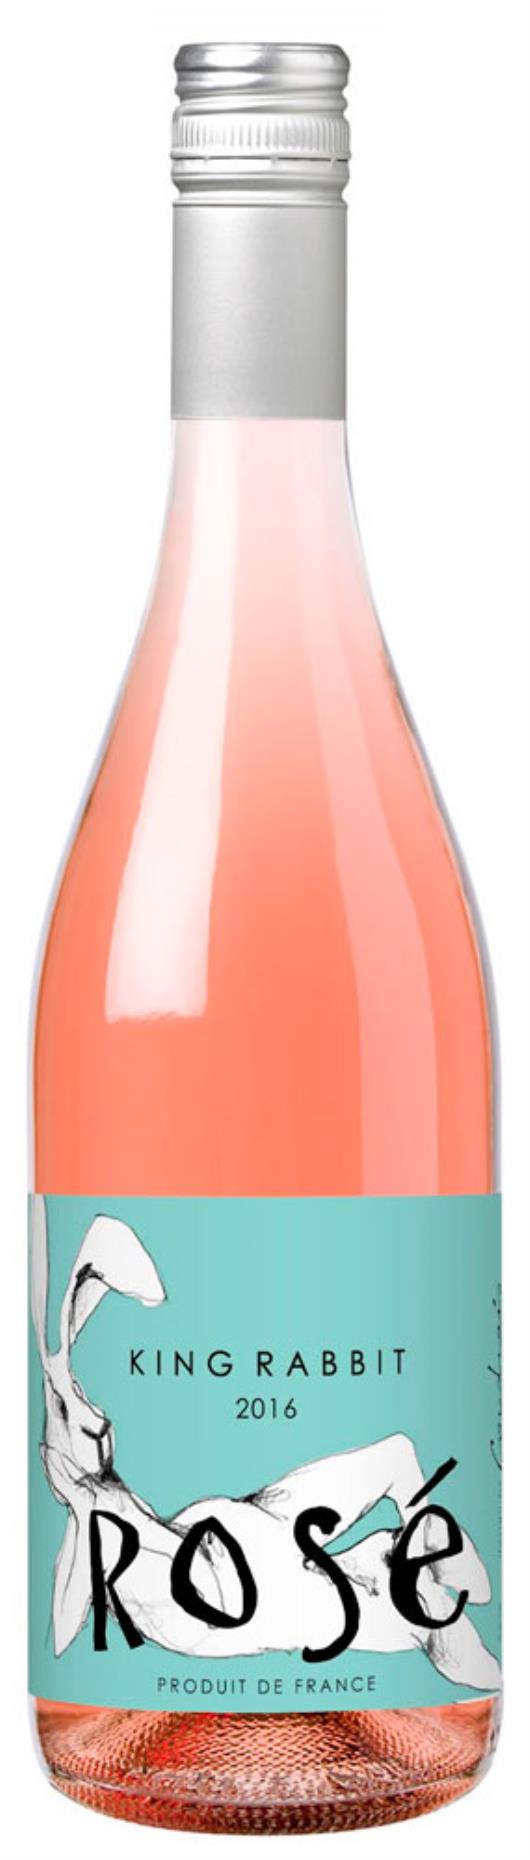 Vinho francês rose King Rabbit vidro 750ml - Imagem em destaque